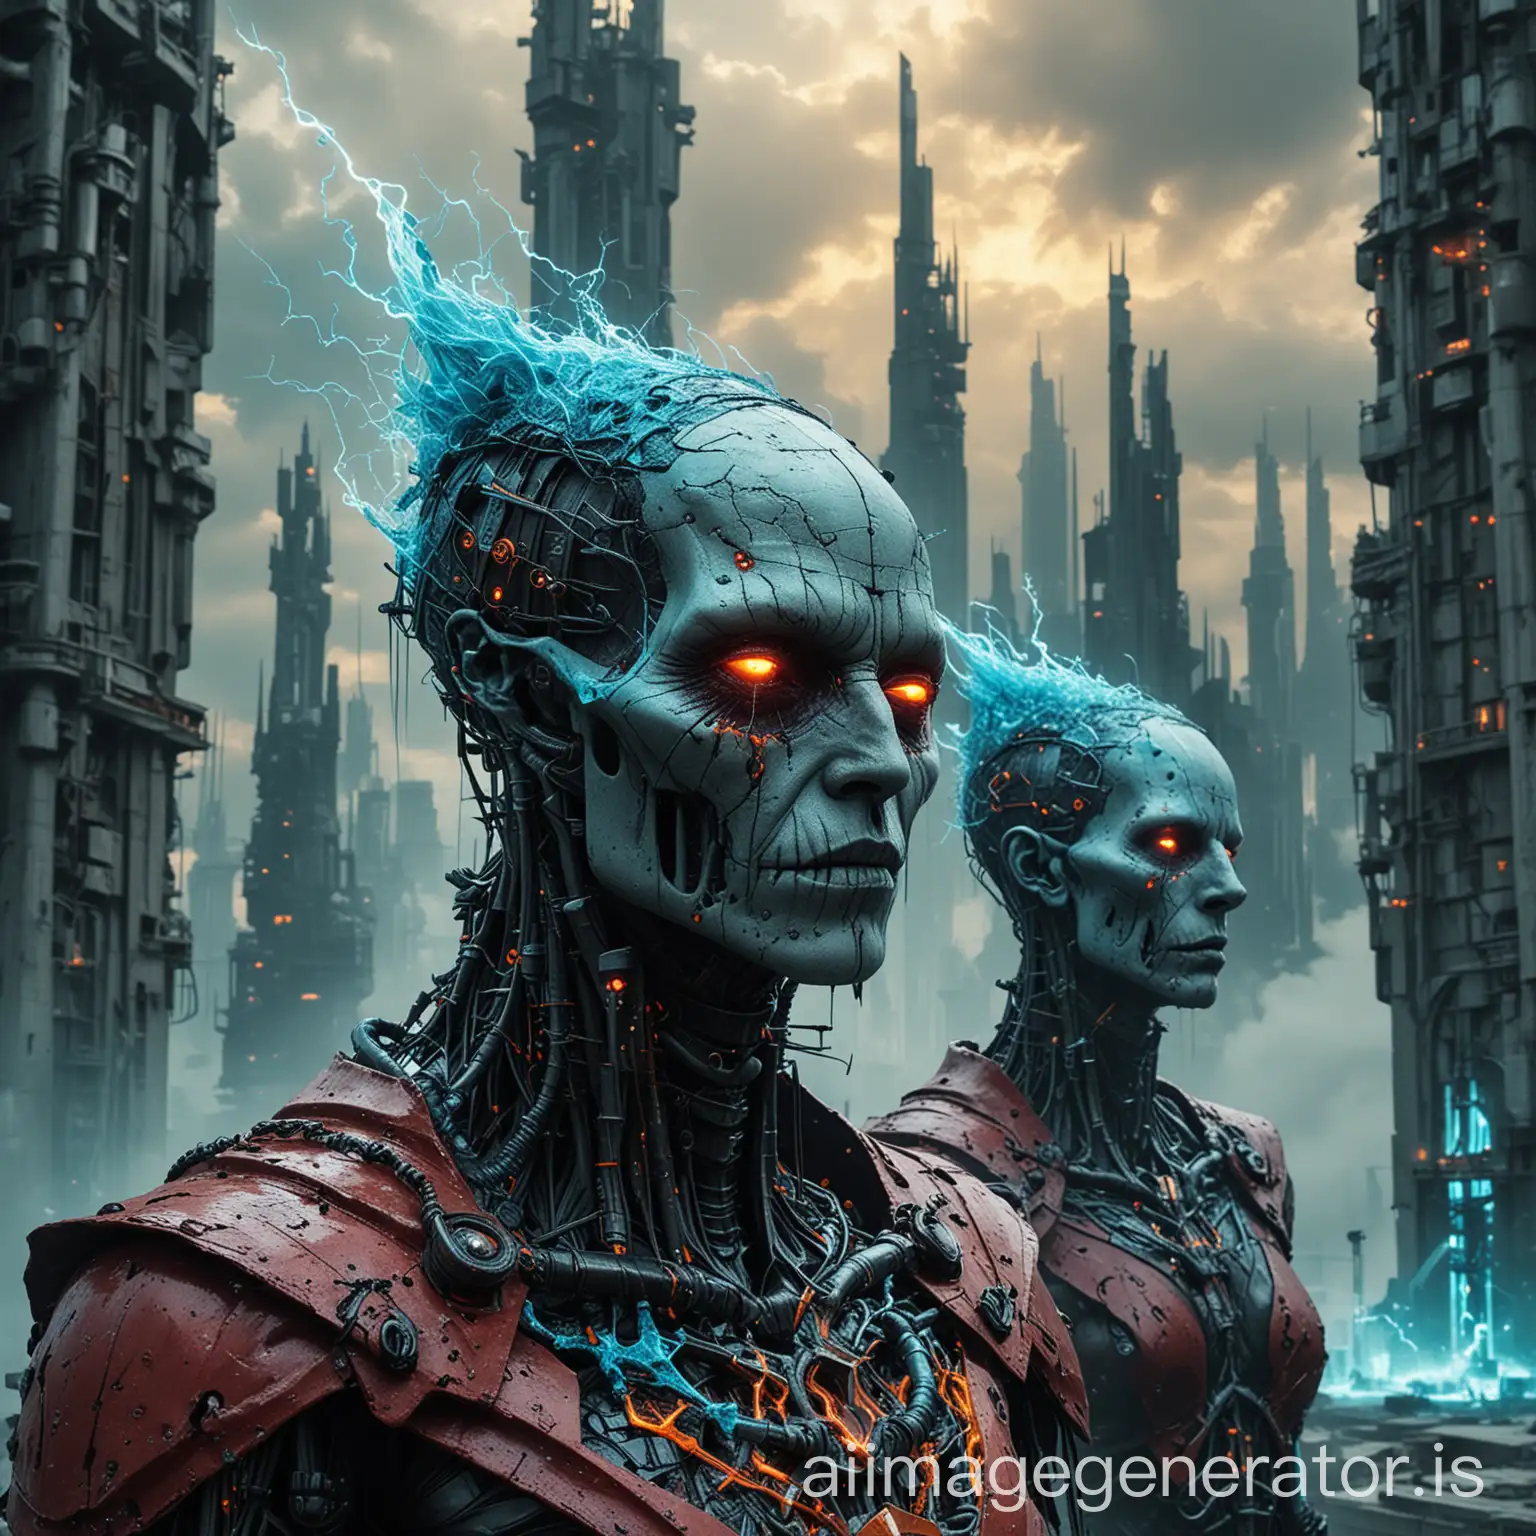 Surreal-Necromancers-Casting-Aqua-and-NeonBlue-Energy-Bolts-in-Futuristic-Cityscape